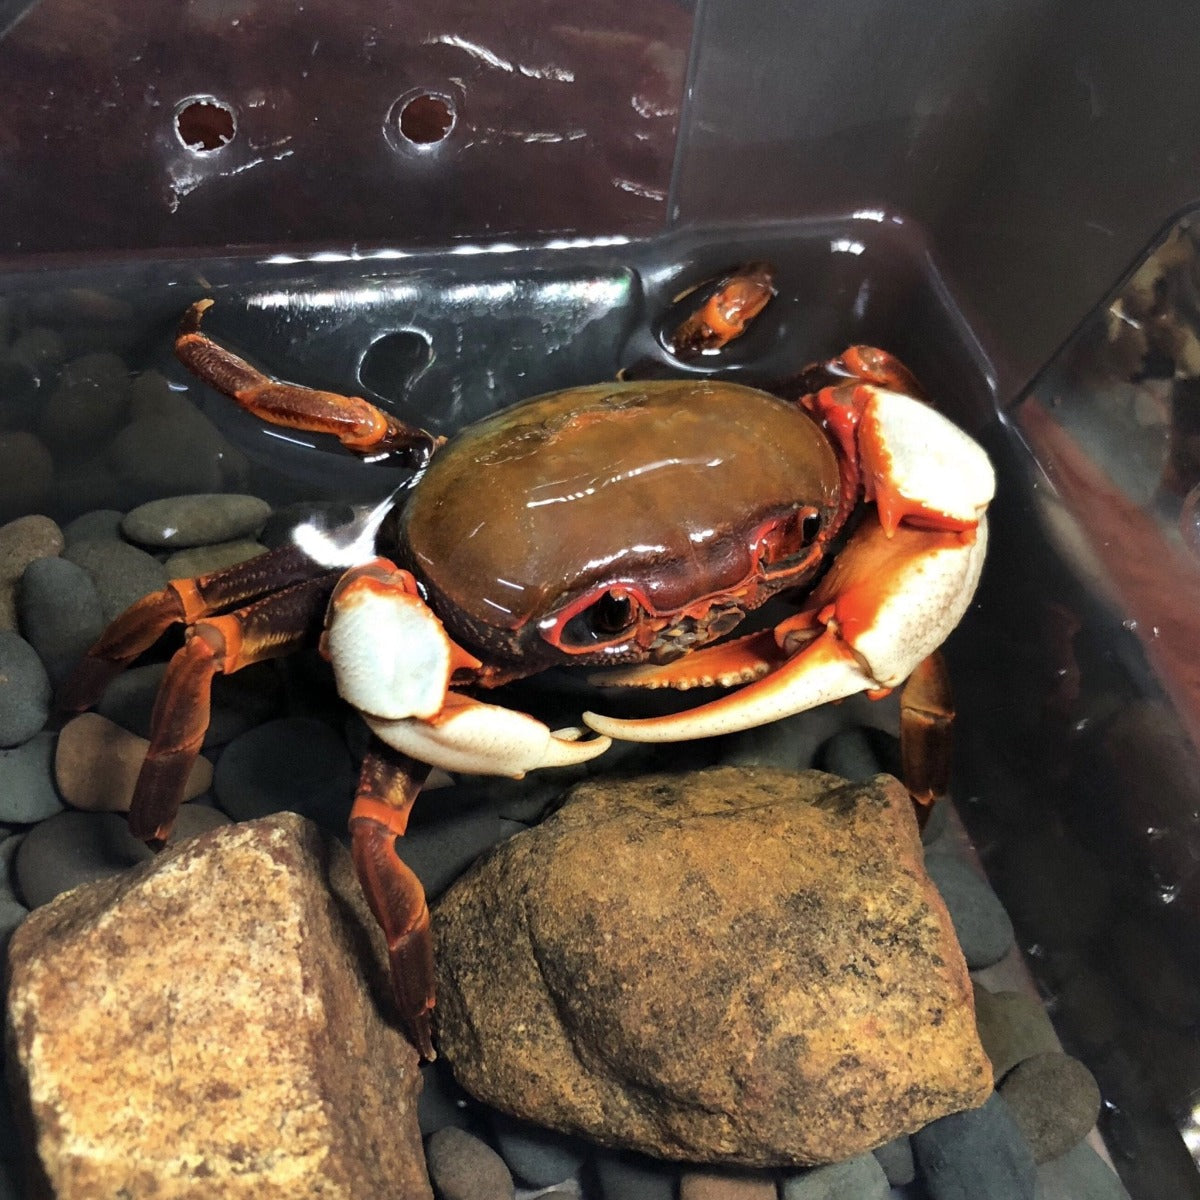 廣東南海溪蟹 Warrior Crab Guangzhou (Nanhaipotamon guangdongens)